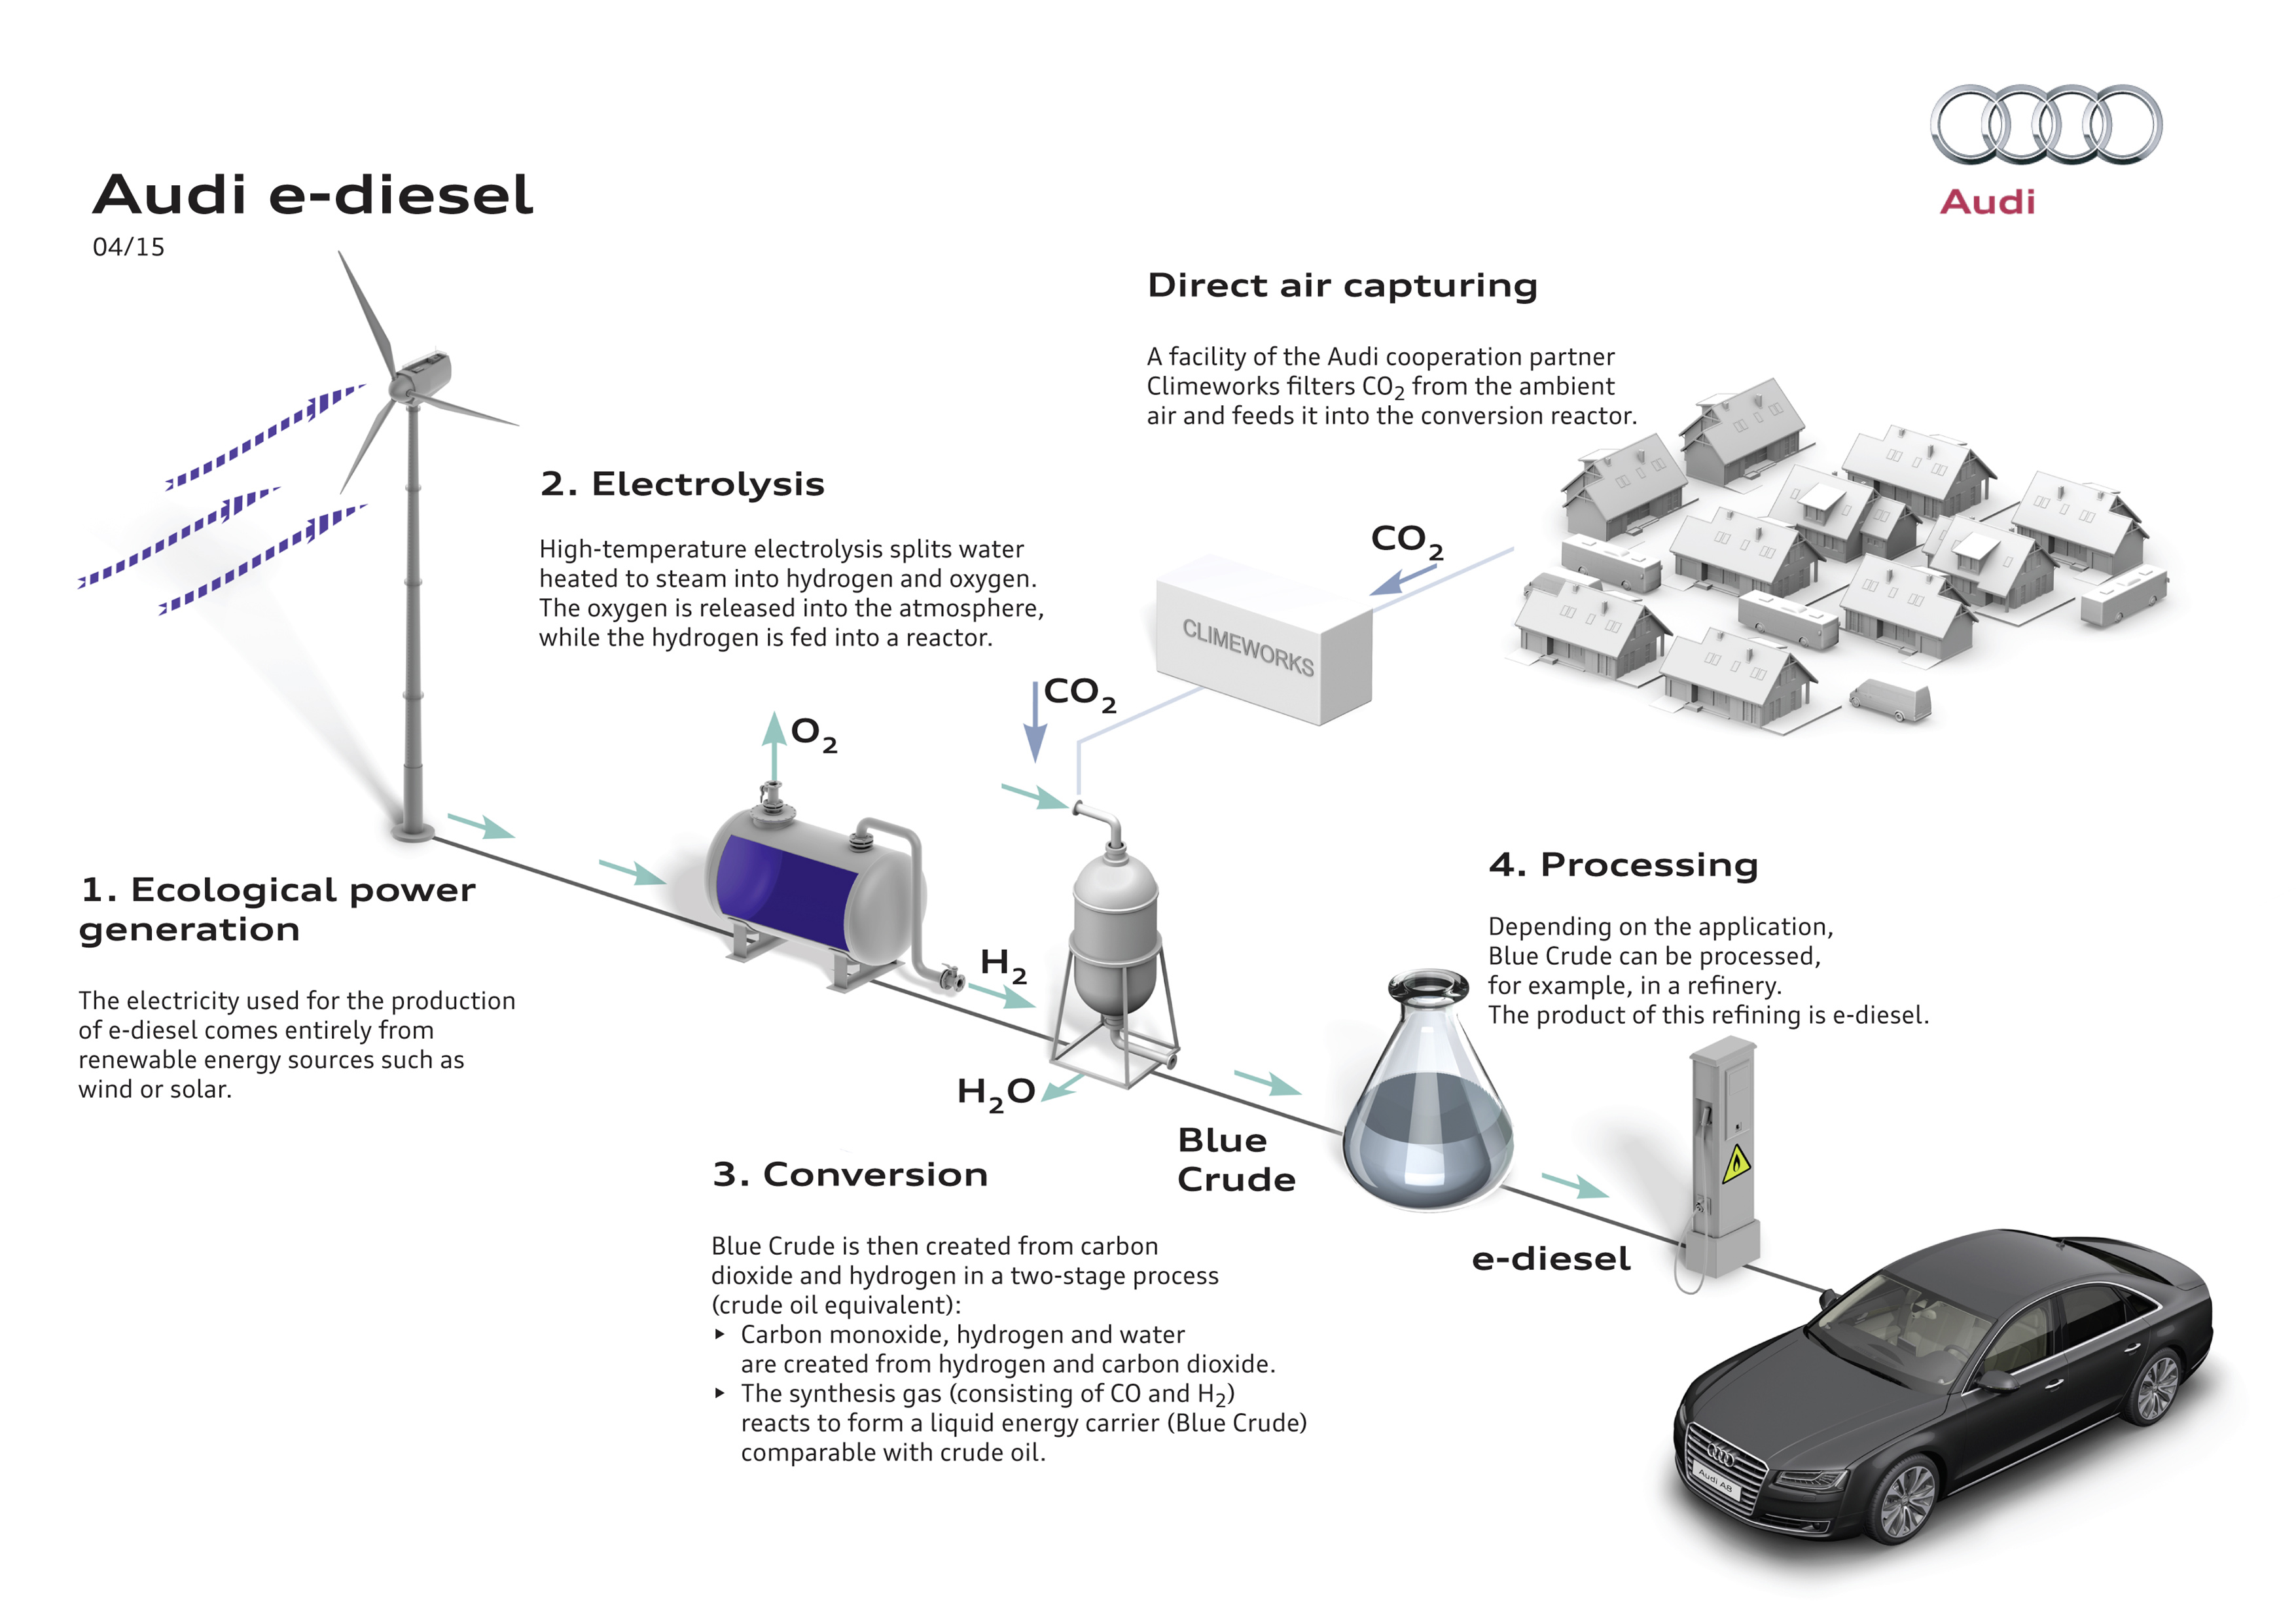 Audi e-diesel production process water co2 carbon dioxide